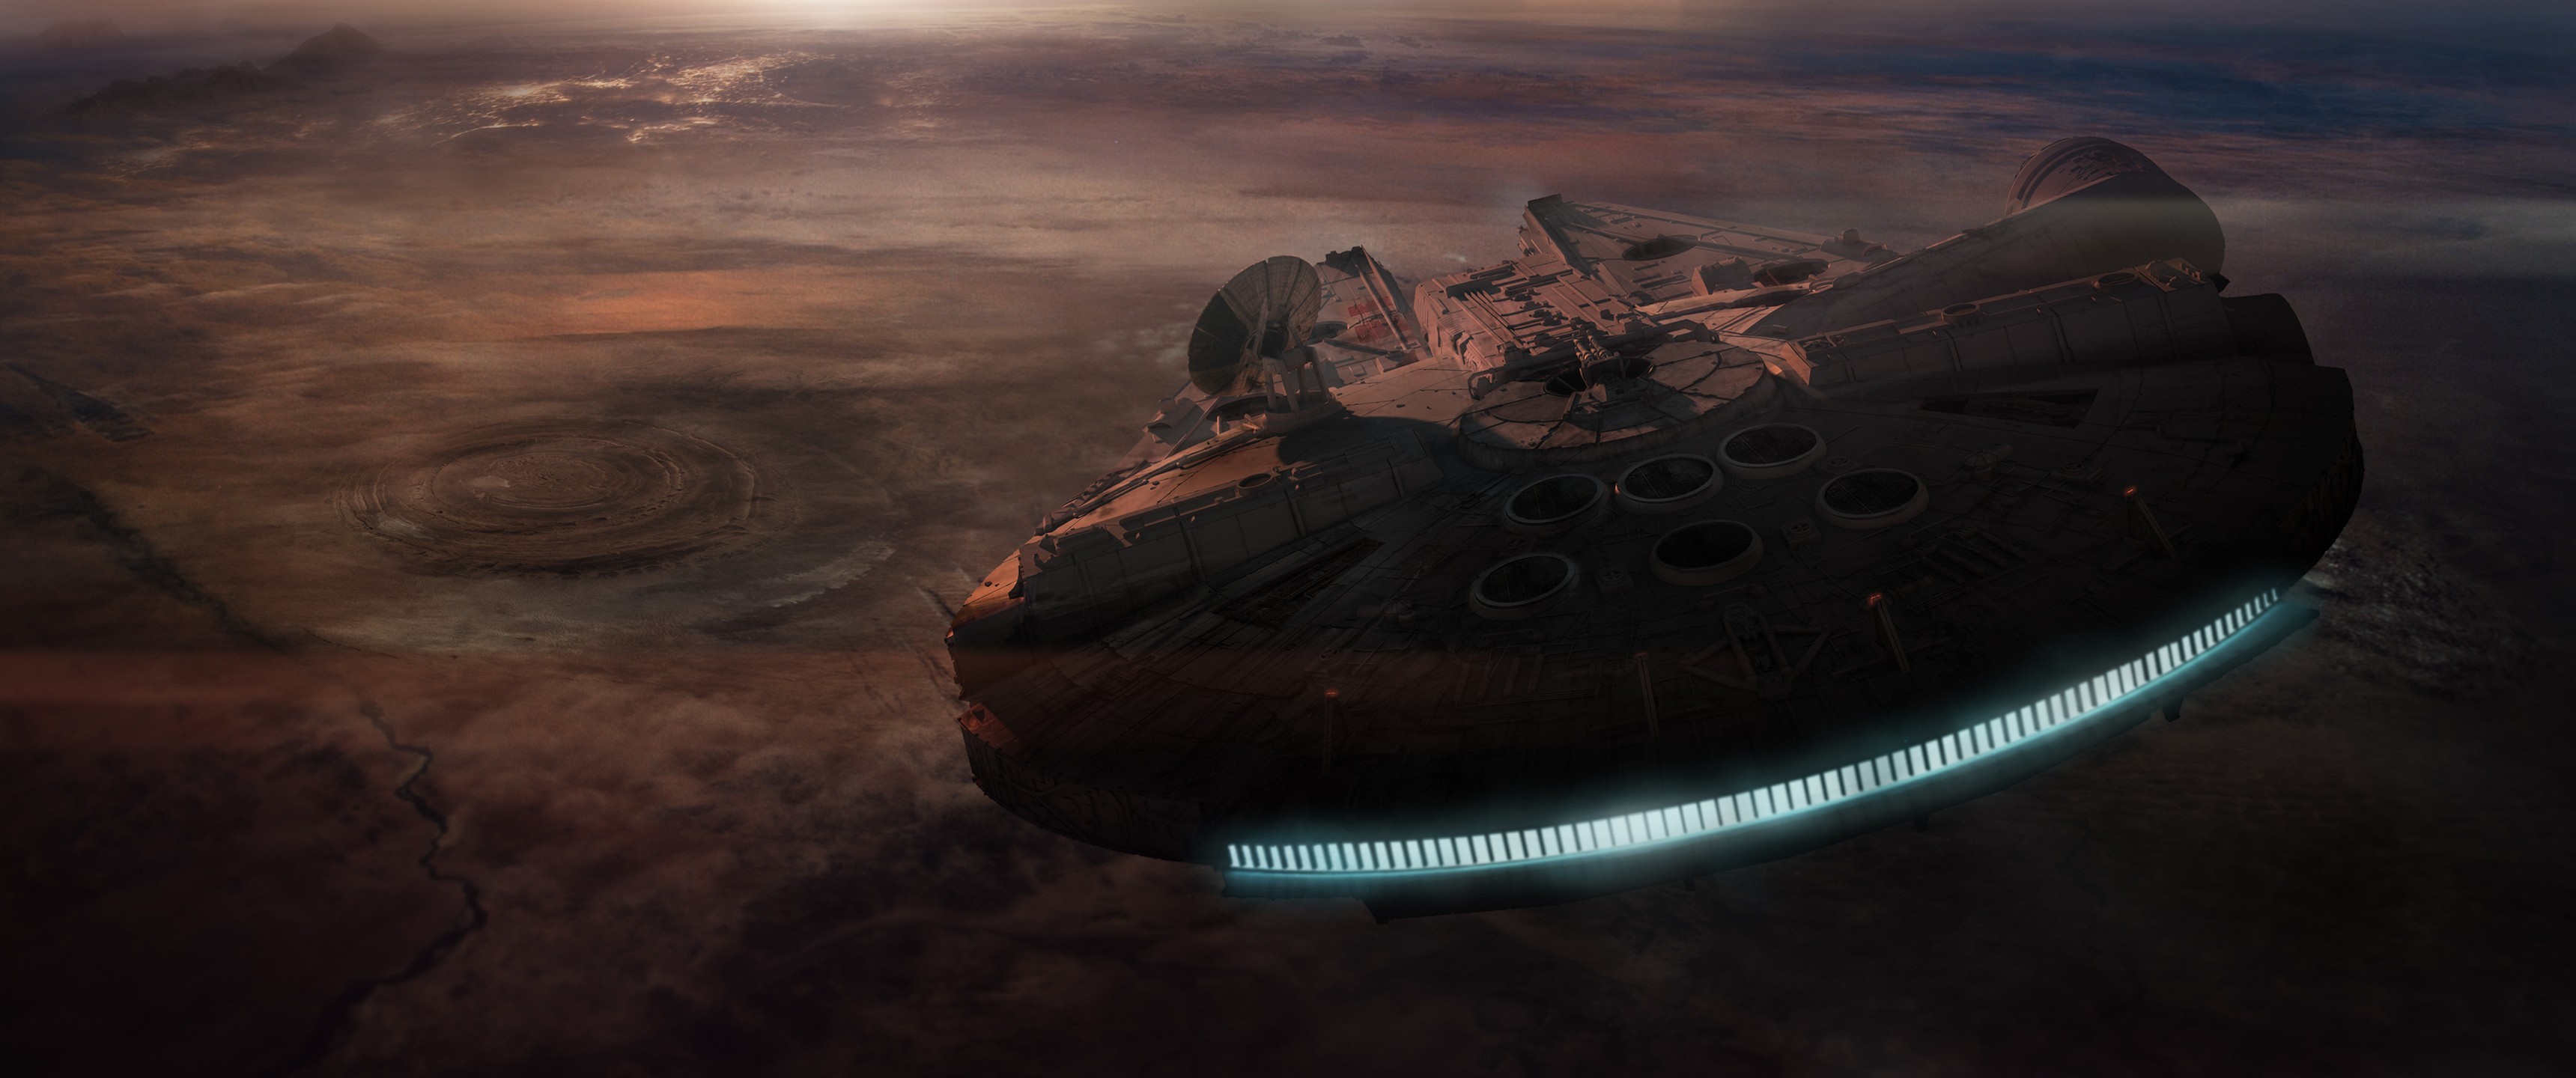 General 3440x1440 science fiction Millennium Falcon spaceship vehicle Star Wars digital art CGI desert planet Star Wars Ships